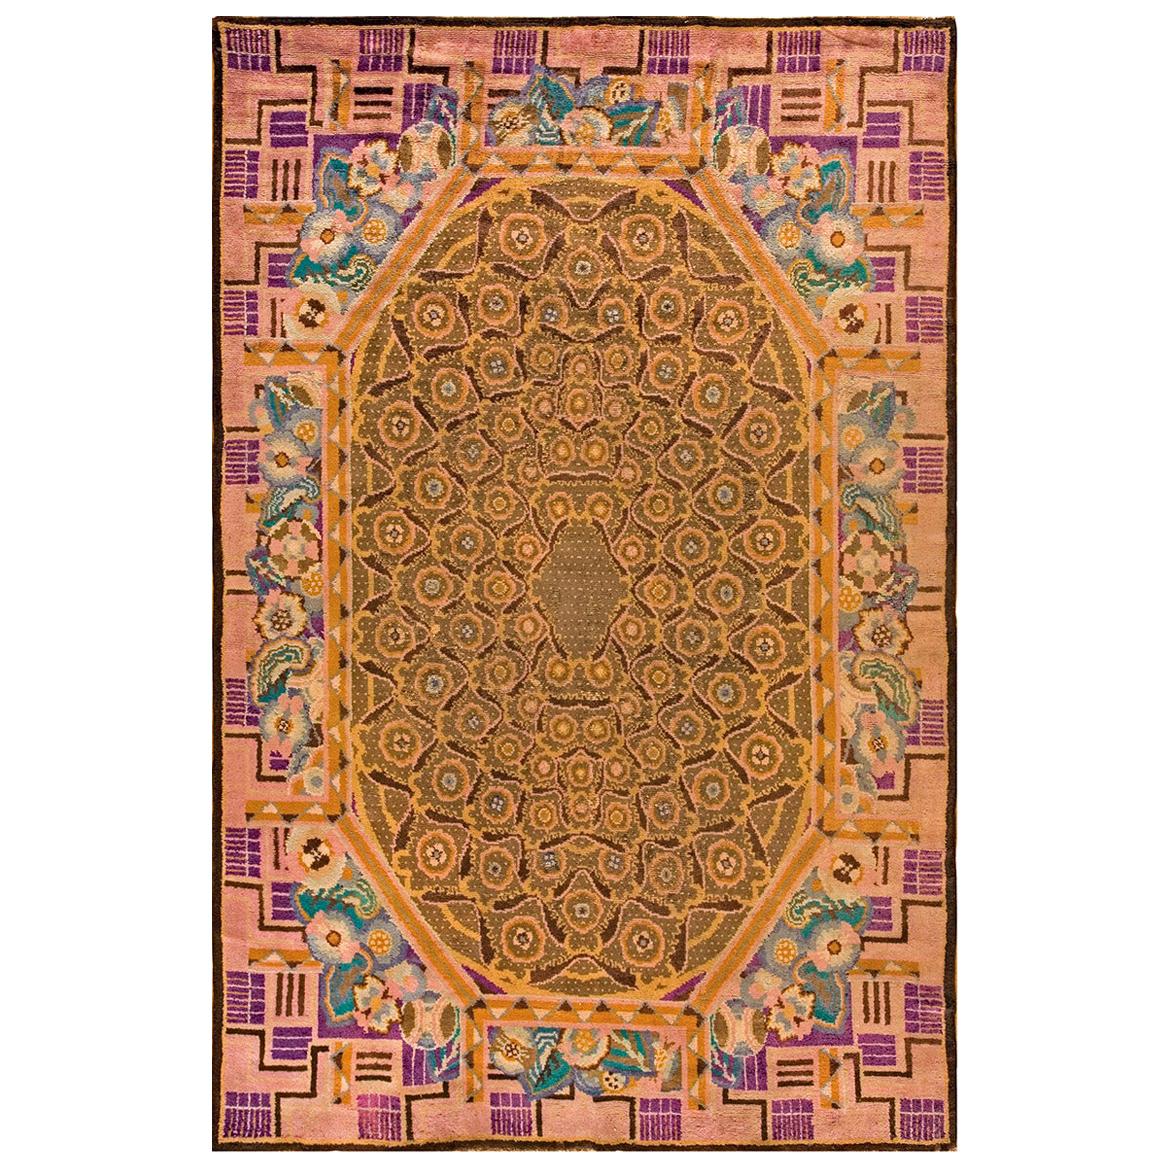 1920s French Art Deco Carpet ( 8'10" x 13'3' - 270 x 405 ) 